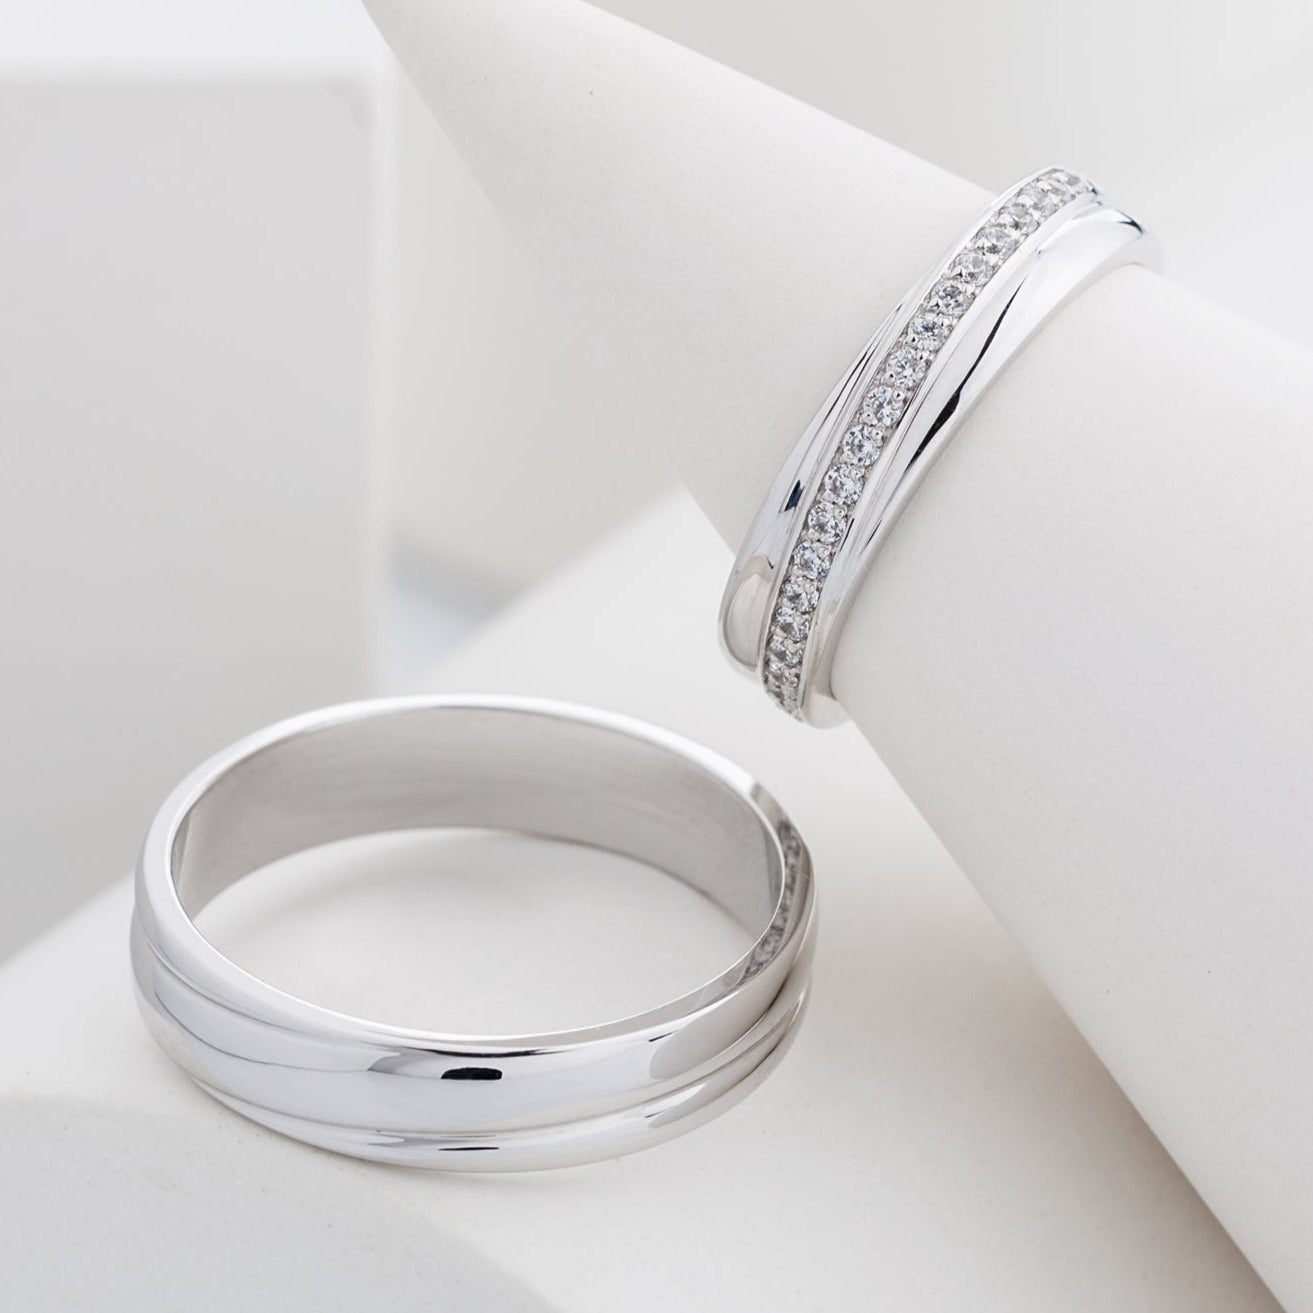 Gold wedding rings set, matching wedding bands, white gold wedding ring with diamonds